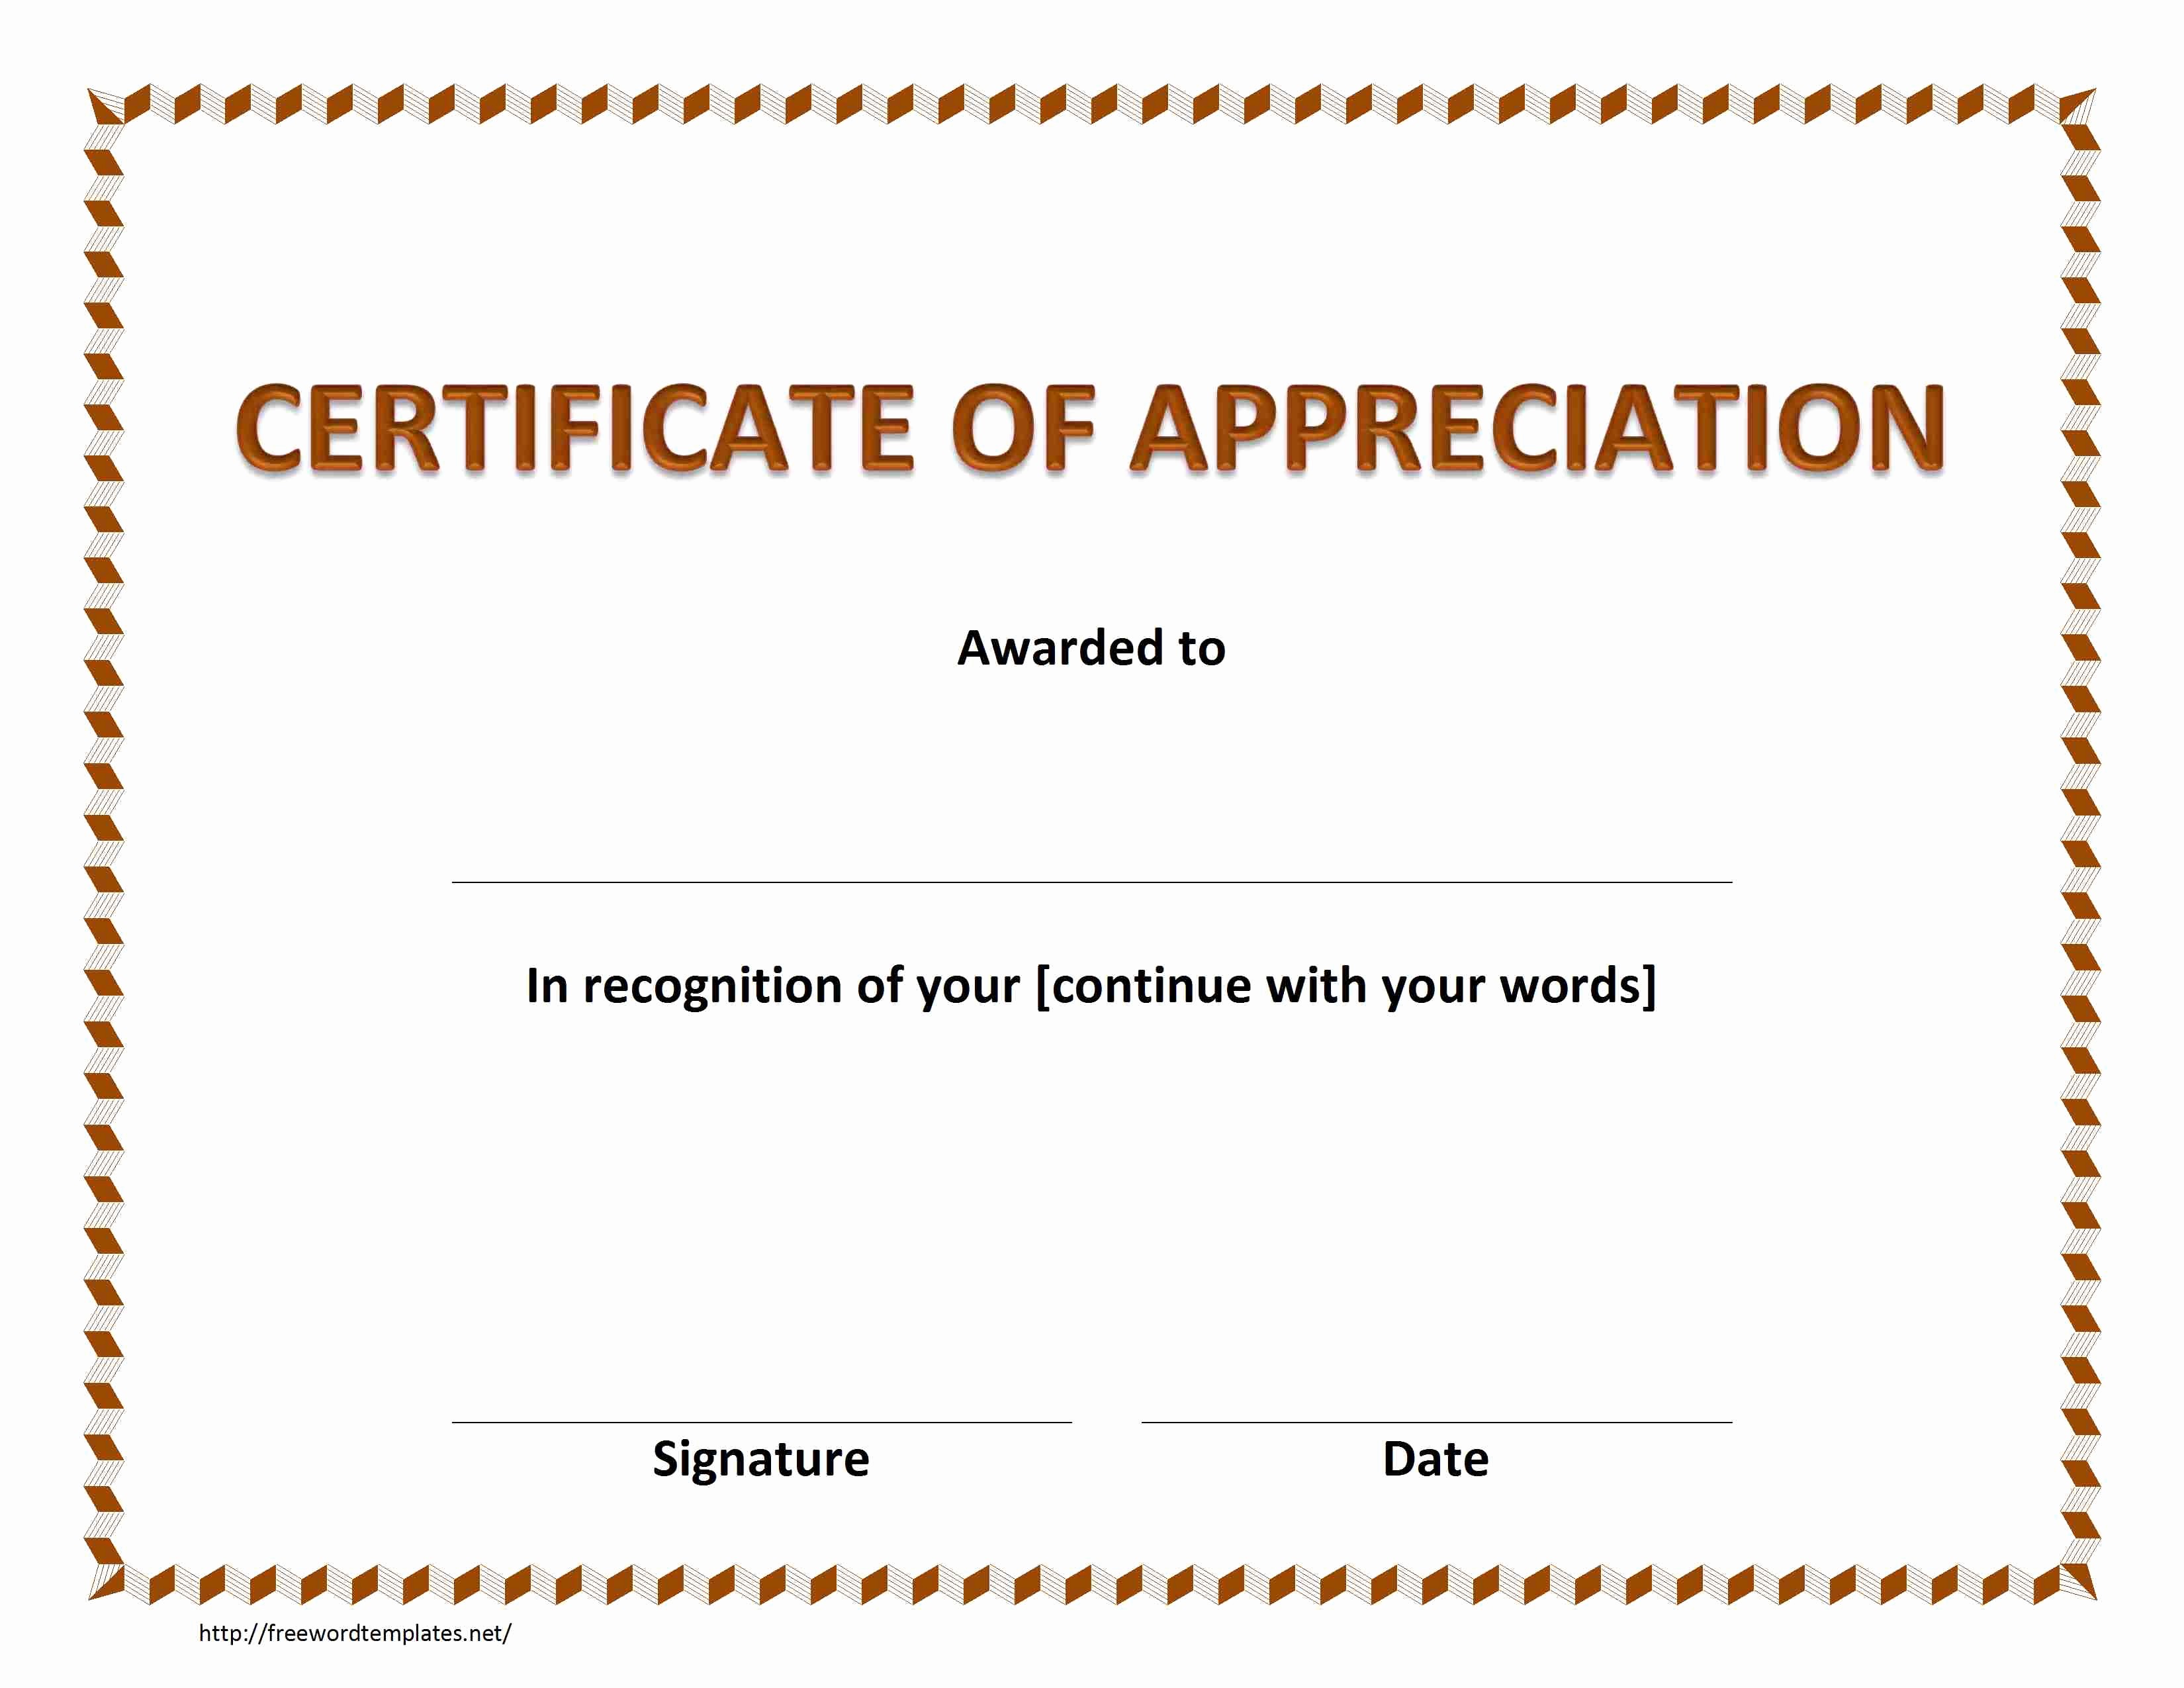 Certificate Of Appreciation Word Template Inspirational Certificate Of Appreciation